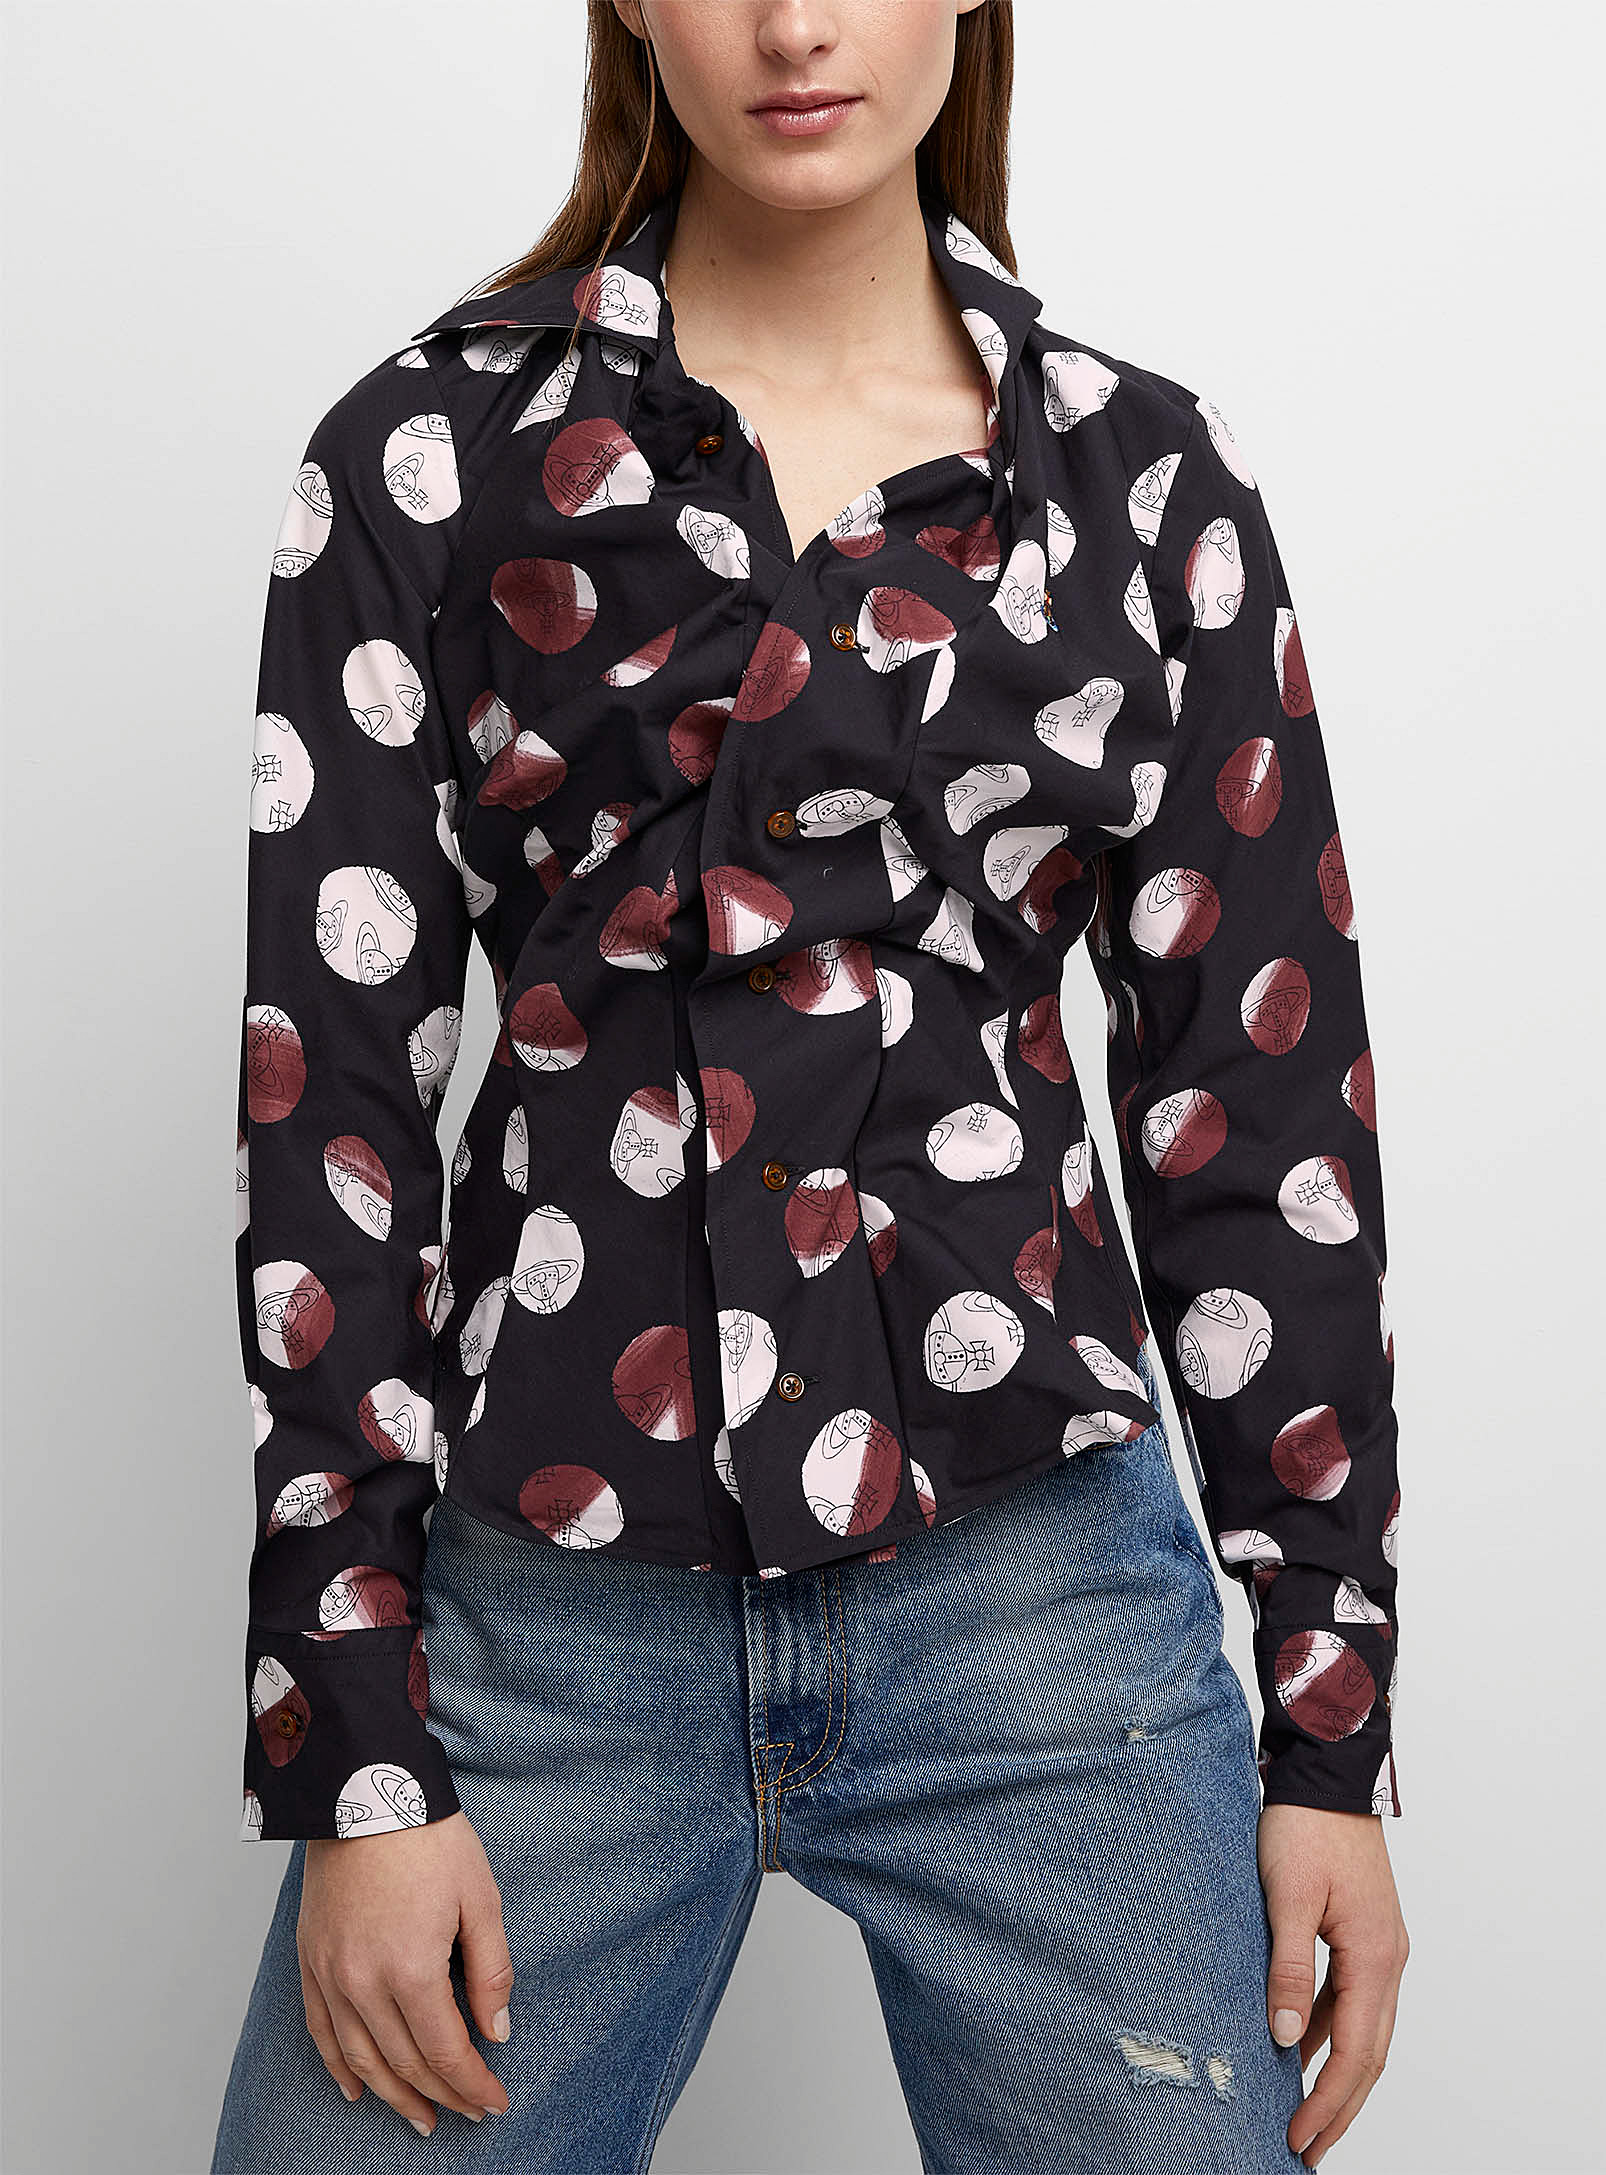 Vivienne Westwood - Women's Drunken dots and orbs shirt